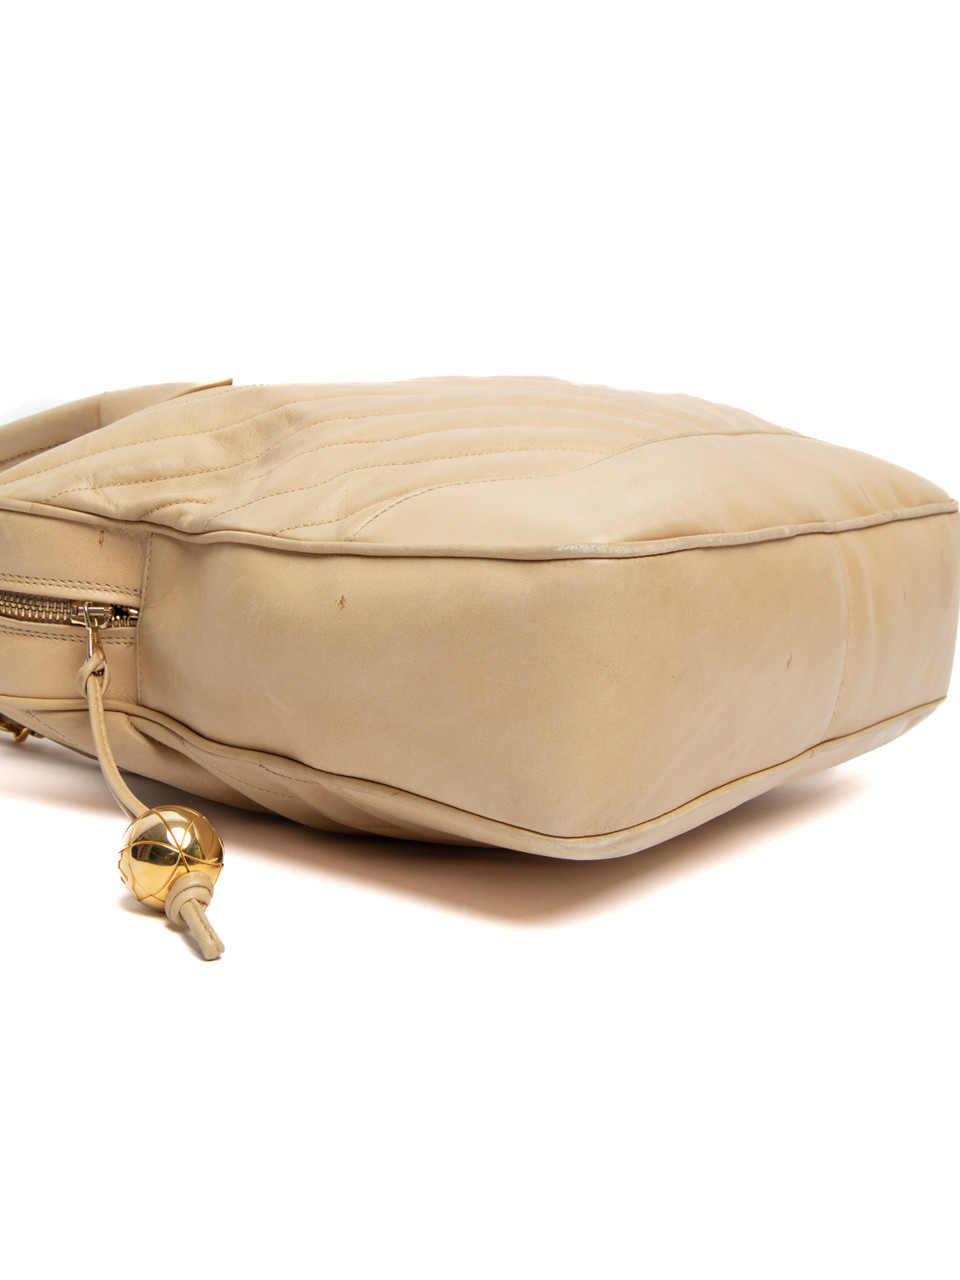 Chanel Vintage Chevron Gold Hardware Top Handle Bag Beige